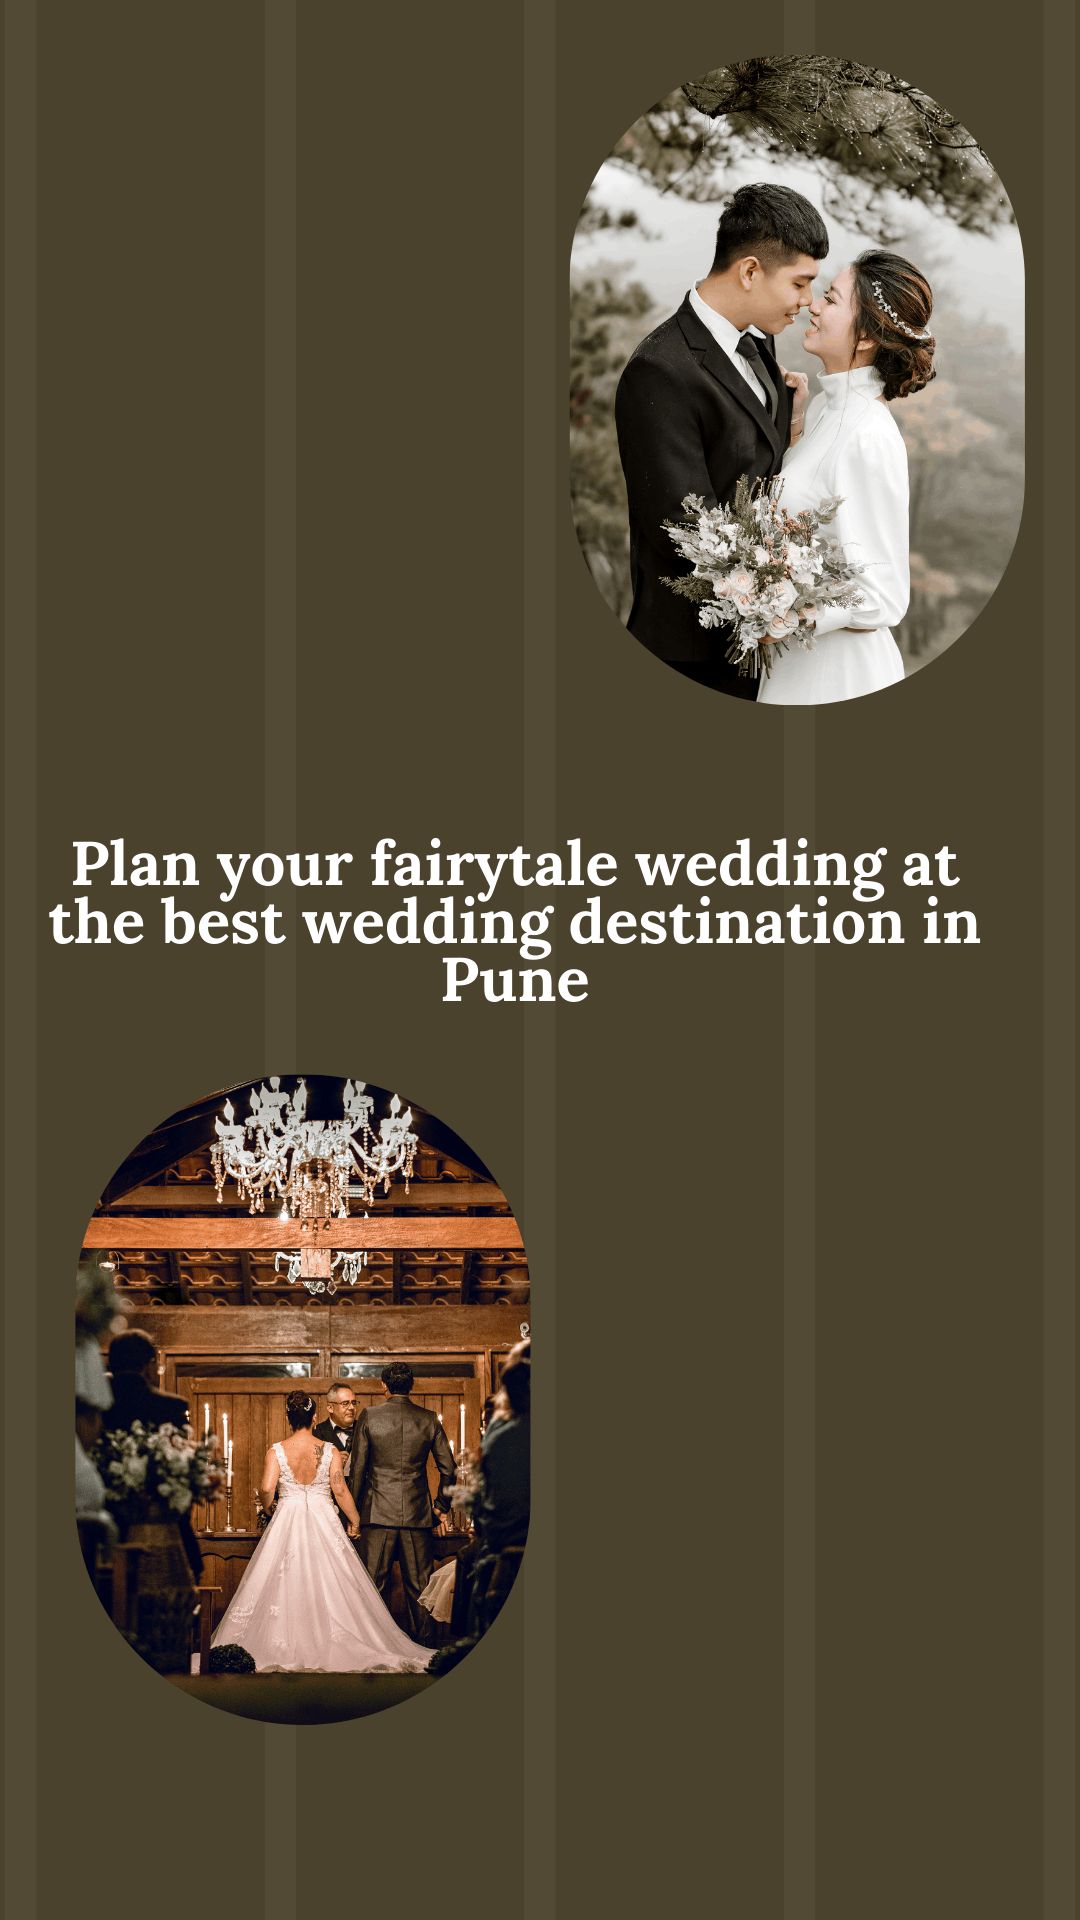 Plan your fairytale wedding at the best wedding destination in Pune